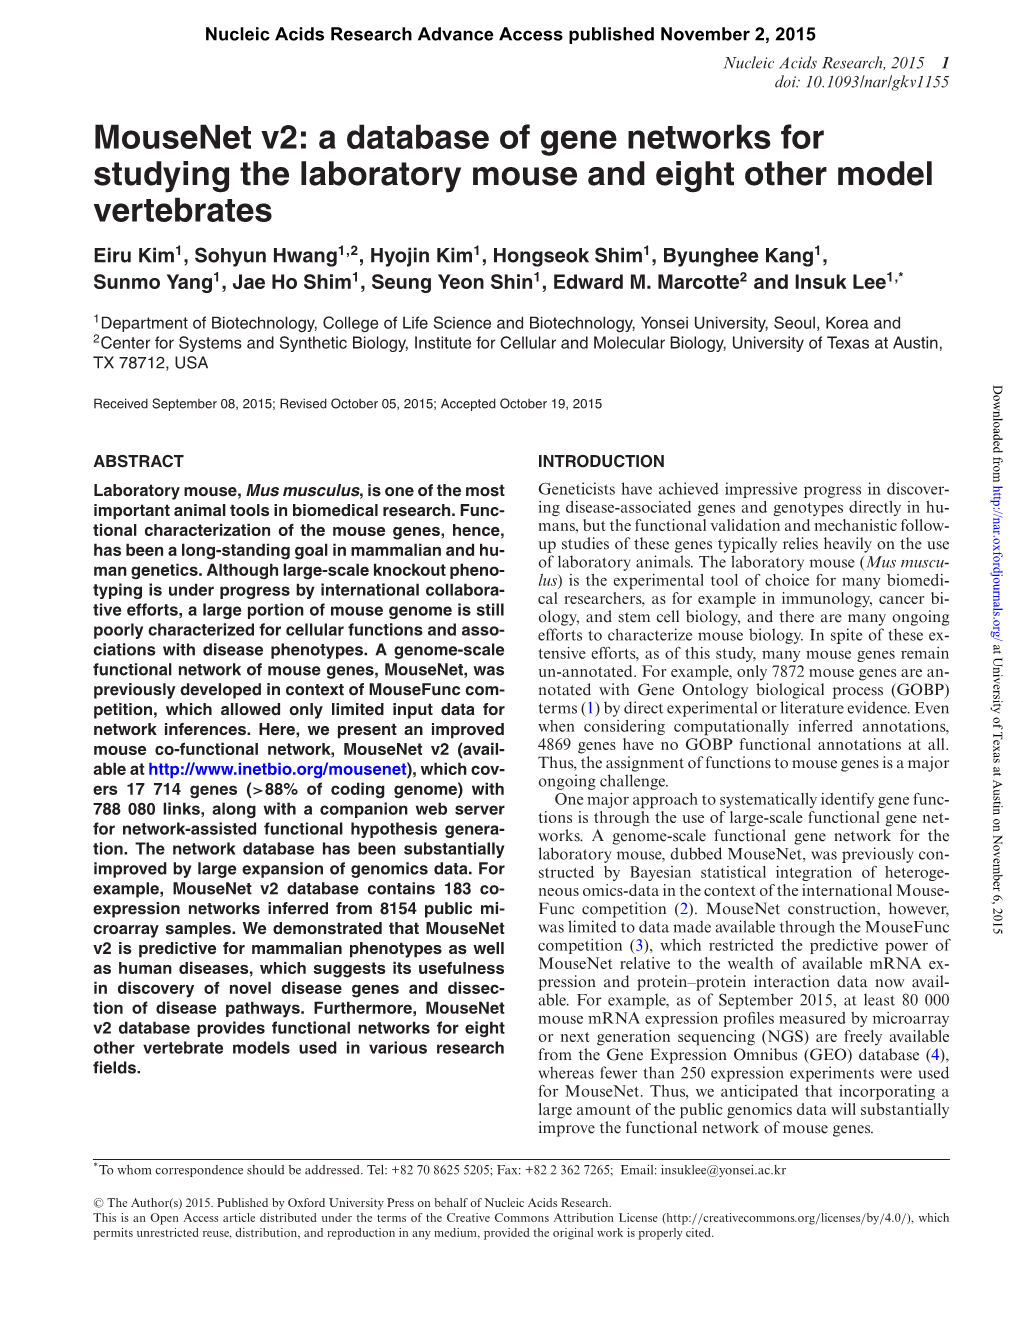 Mousenet V2: a Database of Gene Networks for Studying the Laboratory